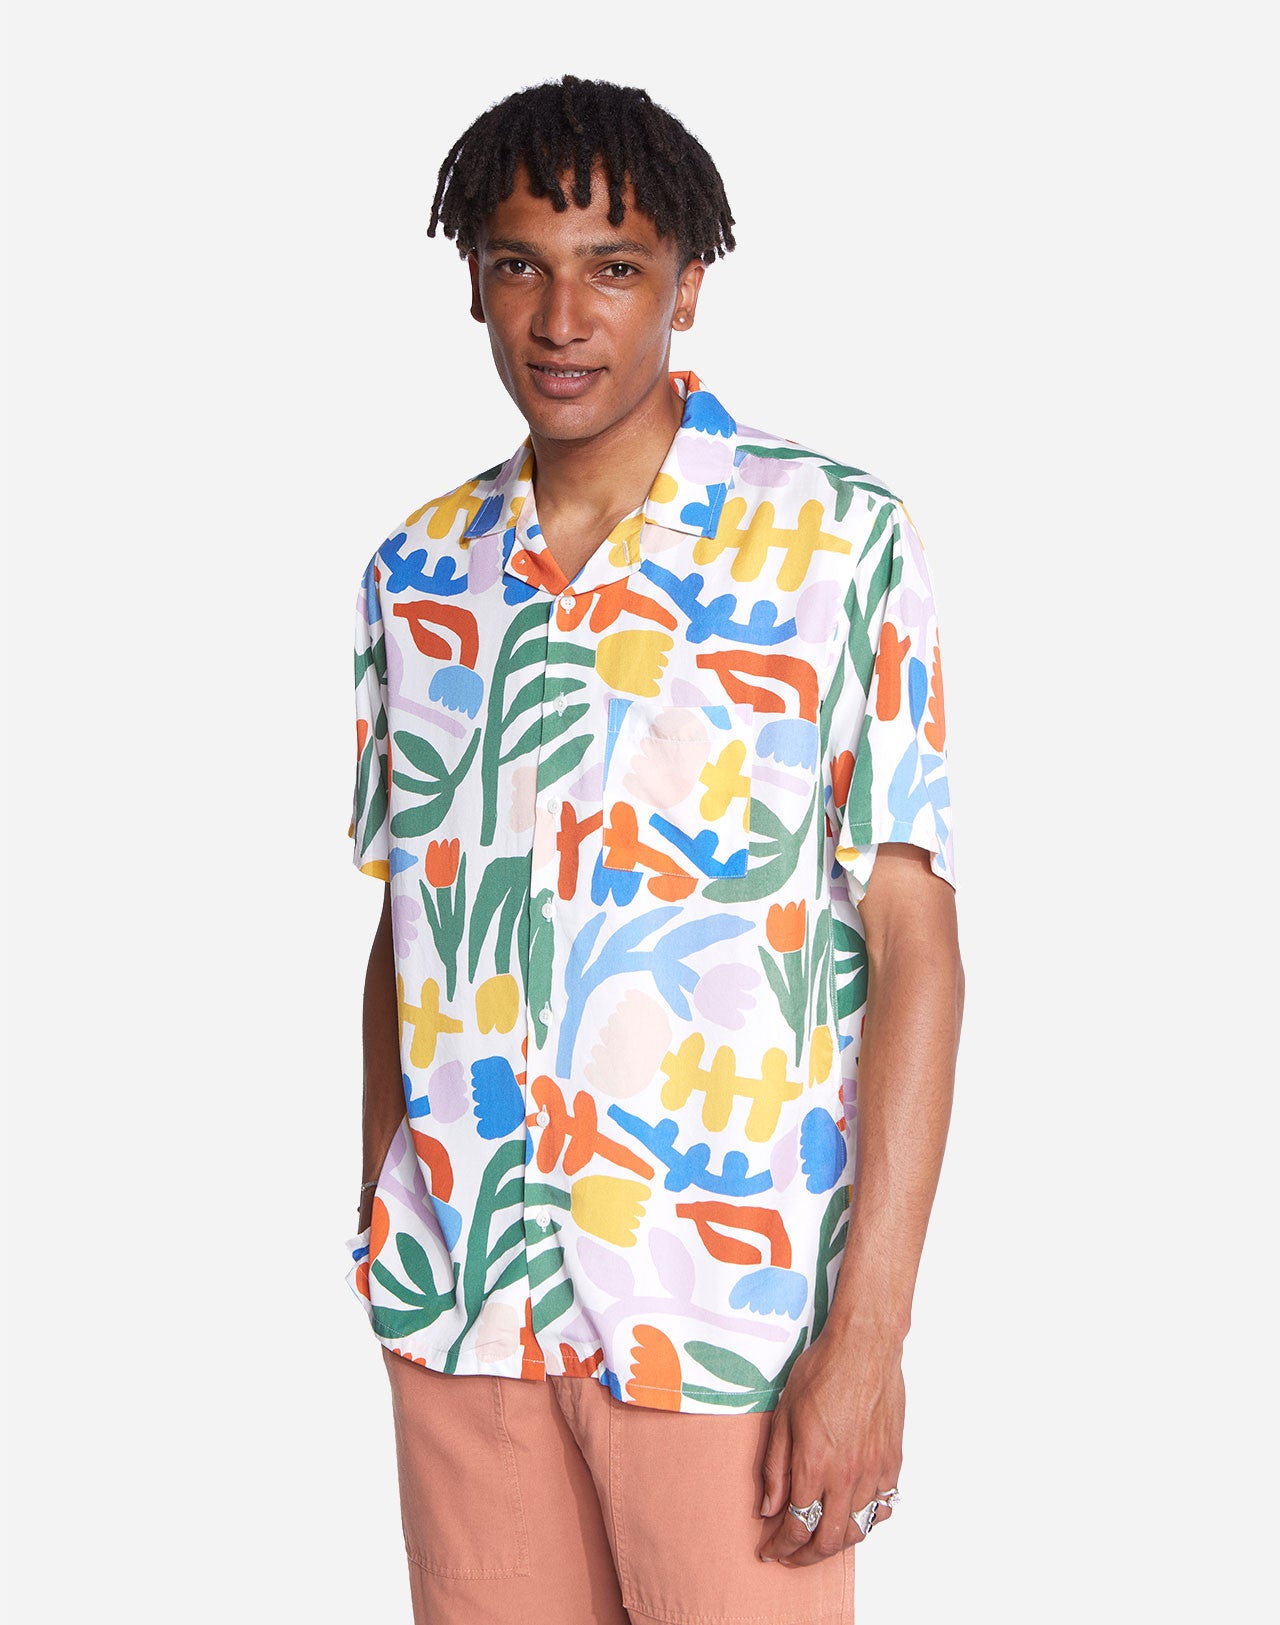 OLOW Aloha Garden Shirt - Multi